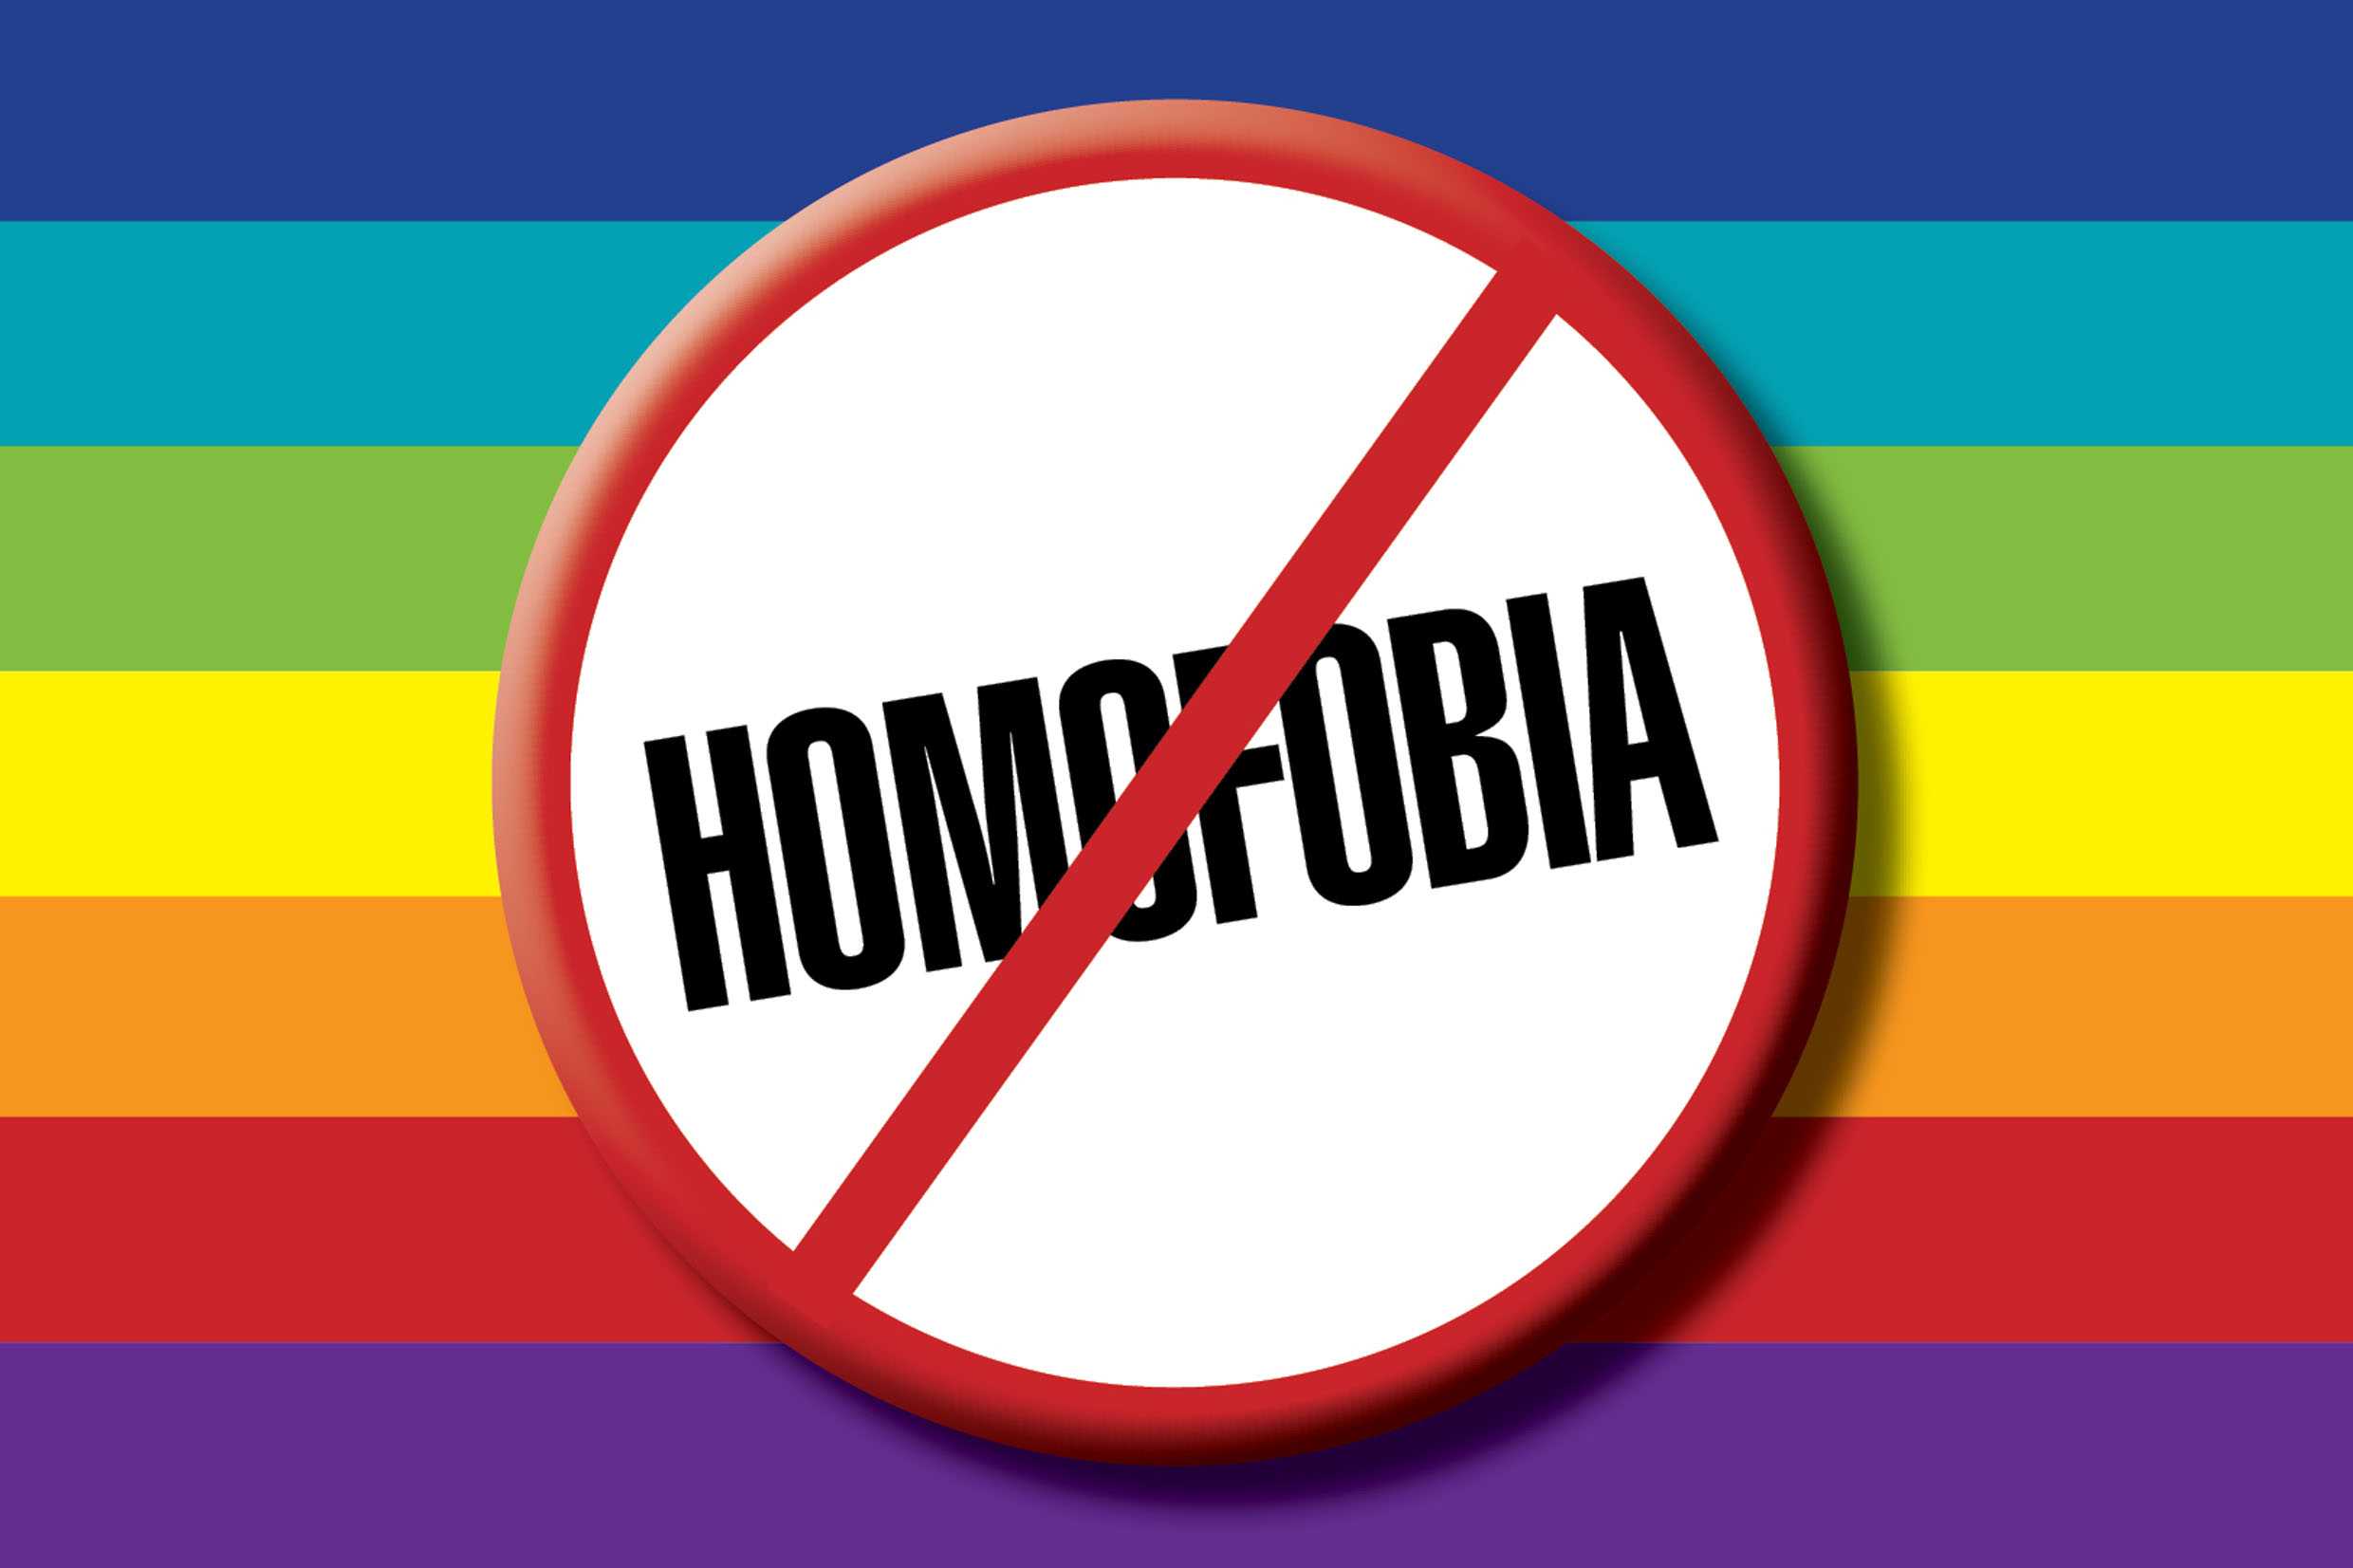 Homofobia, a velha epidemia